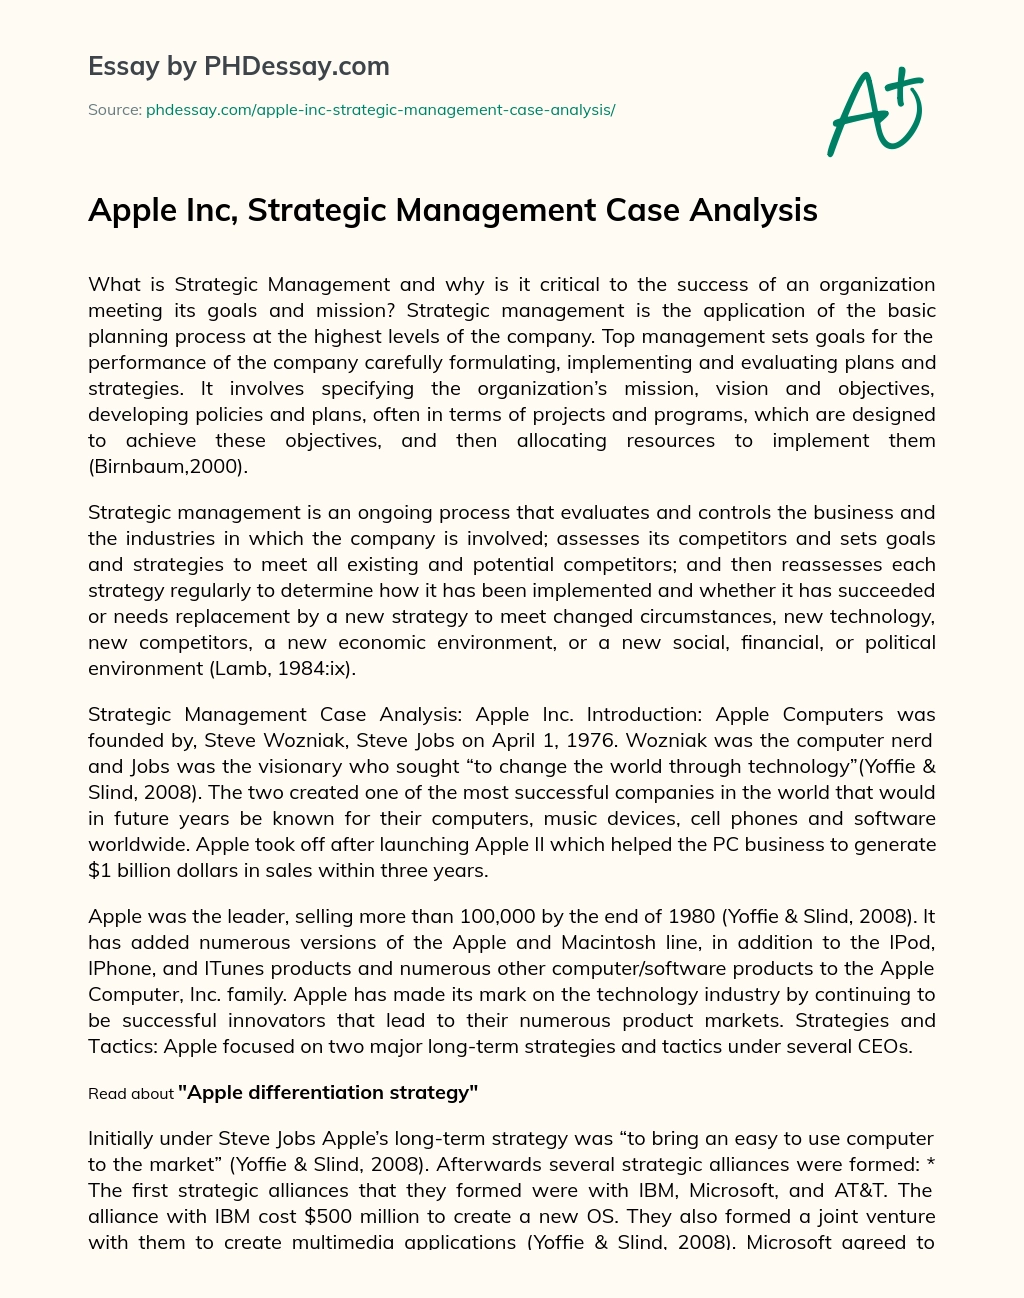 Apple Inc, Strategic Management Case Analysis essay